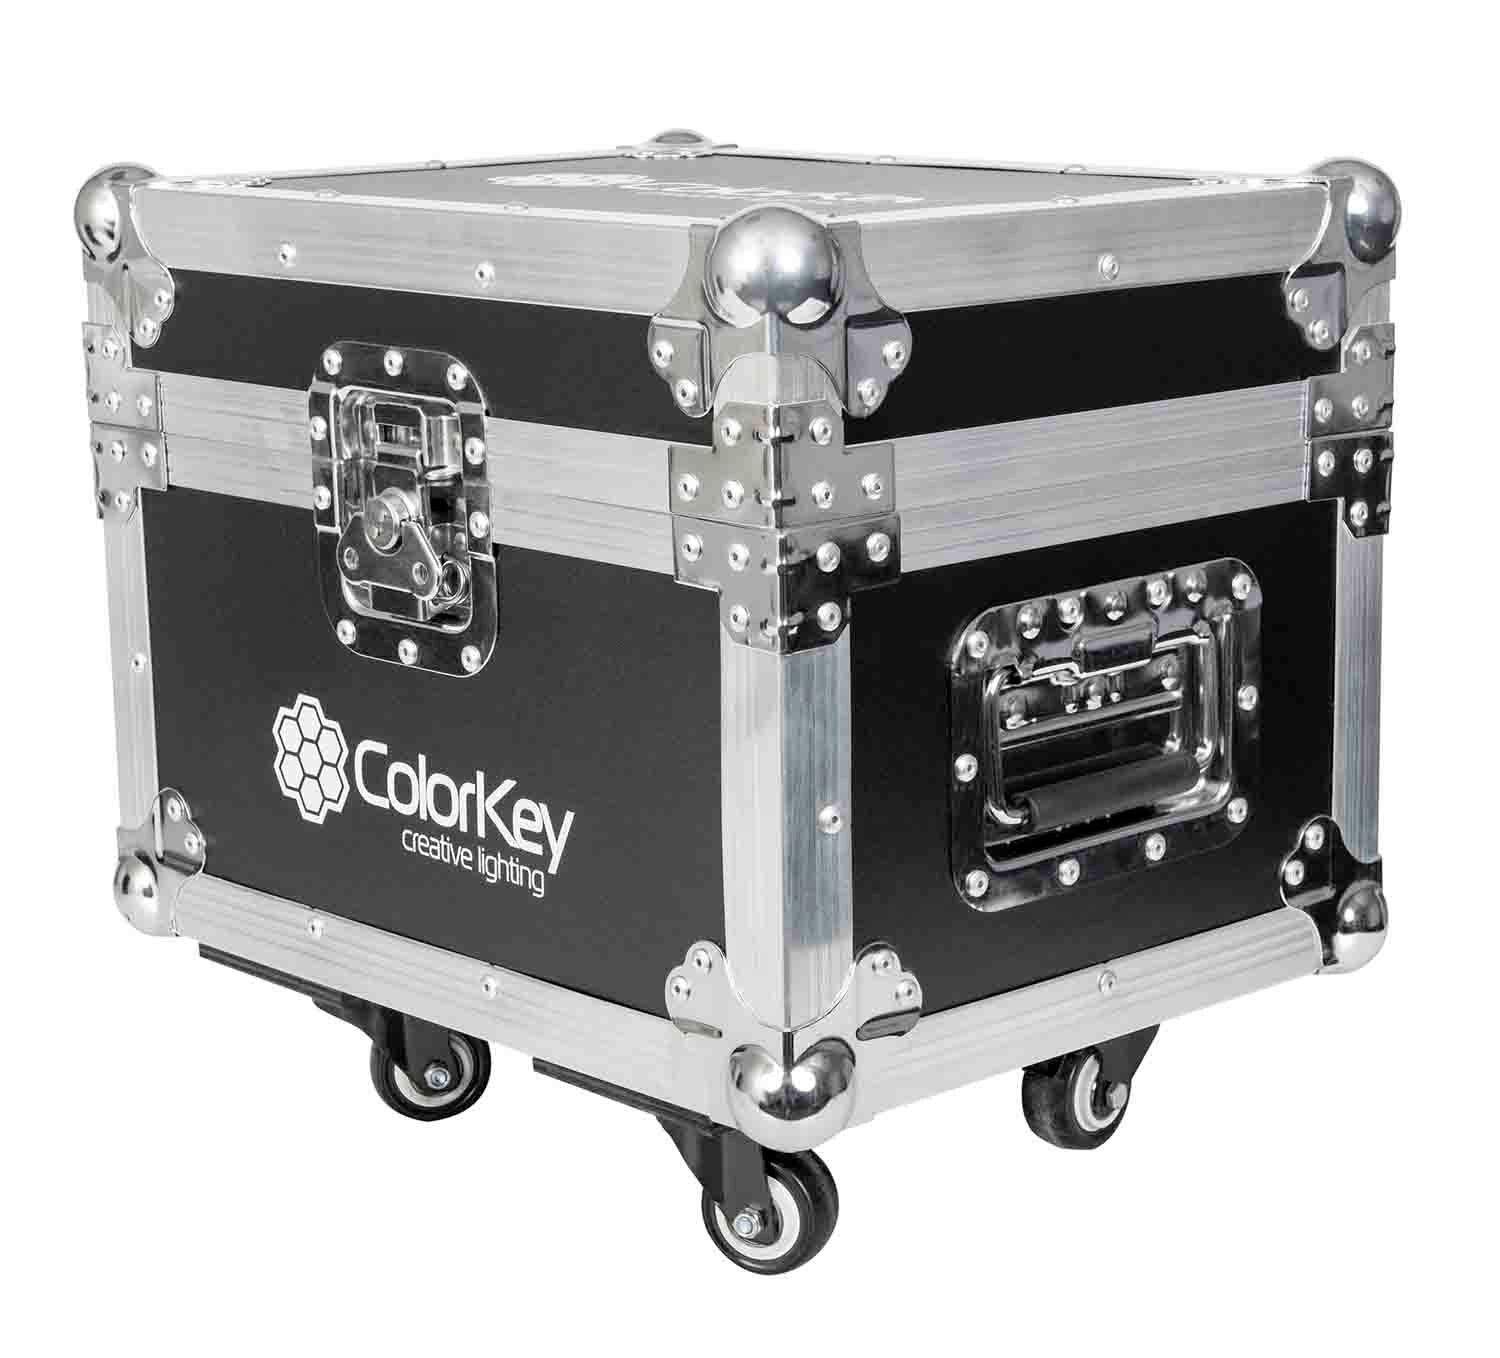 Colorkey CKU-7702-KIT Cold Spark Machine Bundle 2 Dazzlers with Road Case - Black - Hollywood DJ